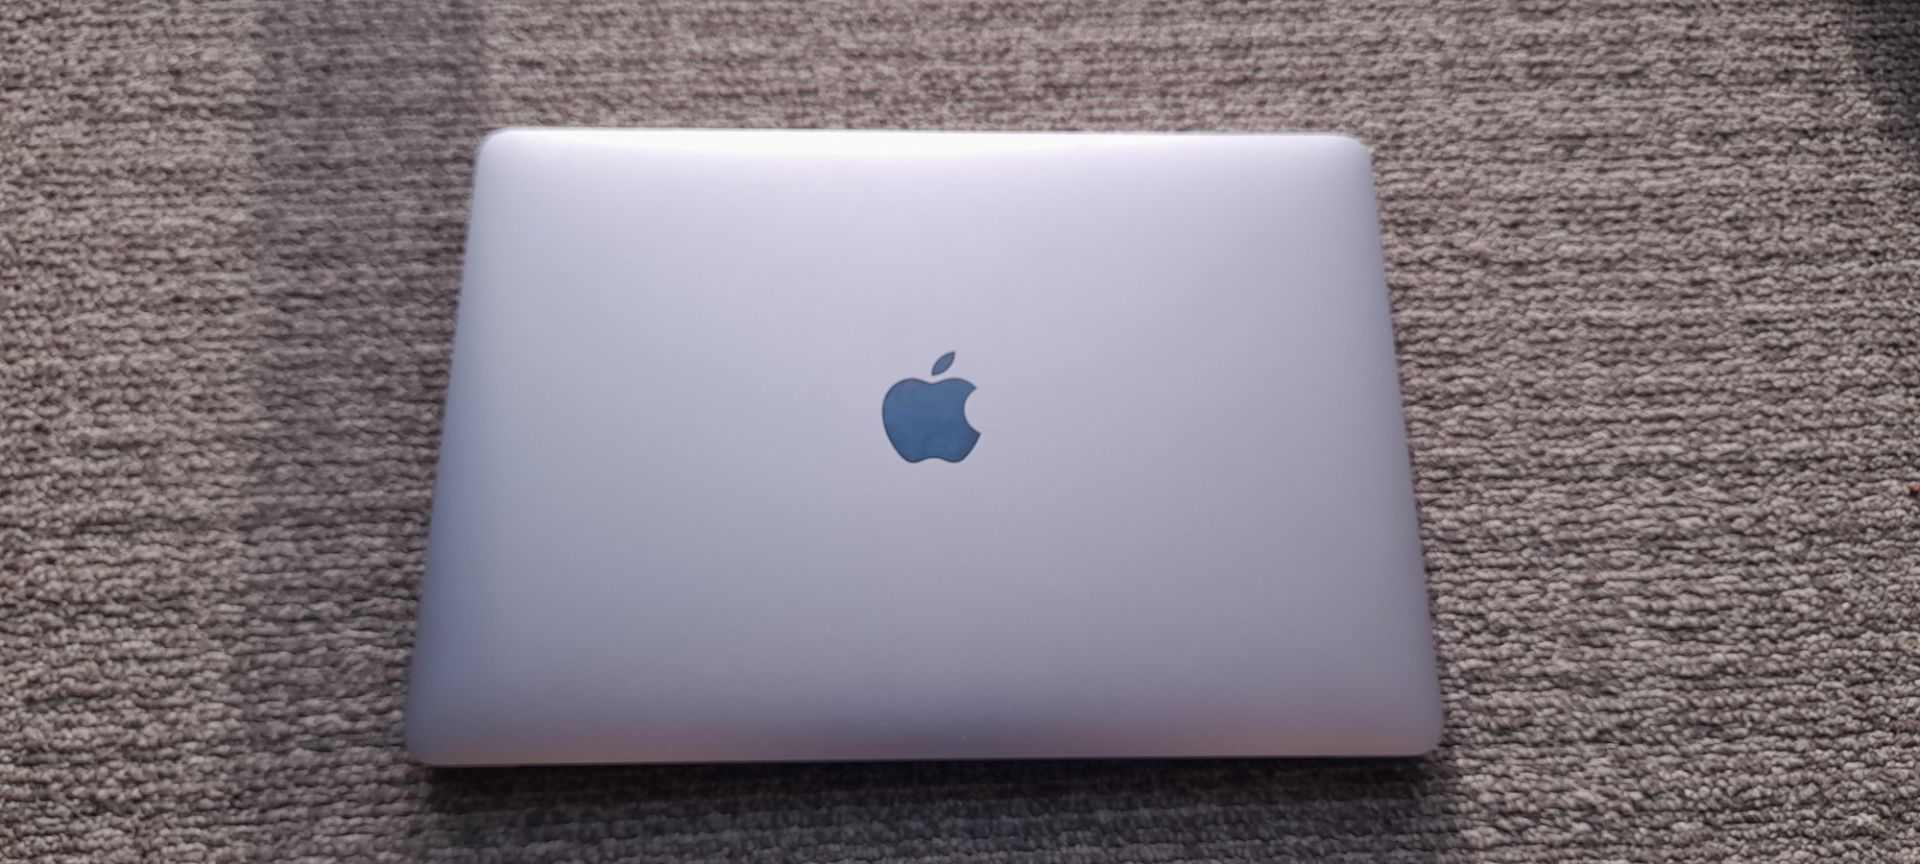 MacBook Pro 13", M1, A2338 EMC 3578, S/N: FVFGW2REQ05F – Defective display – In recovery mode